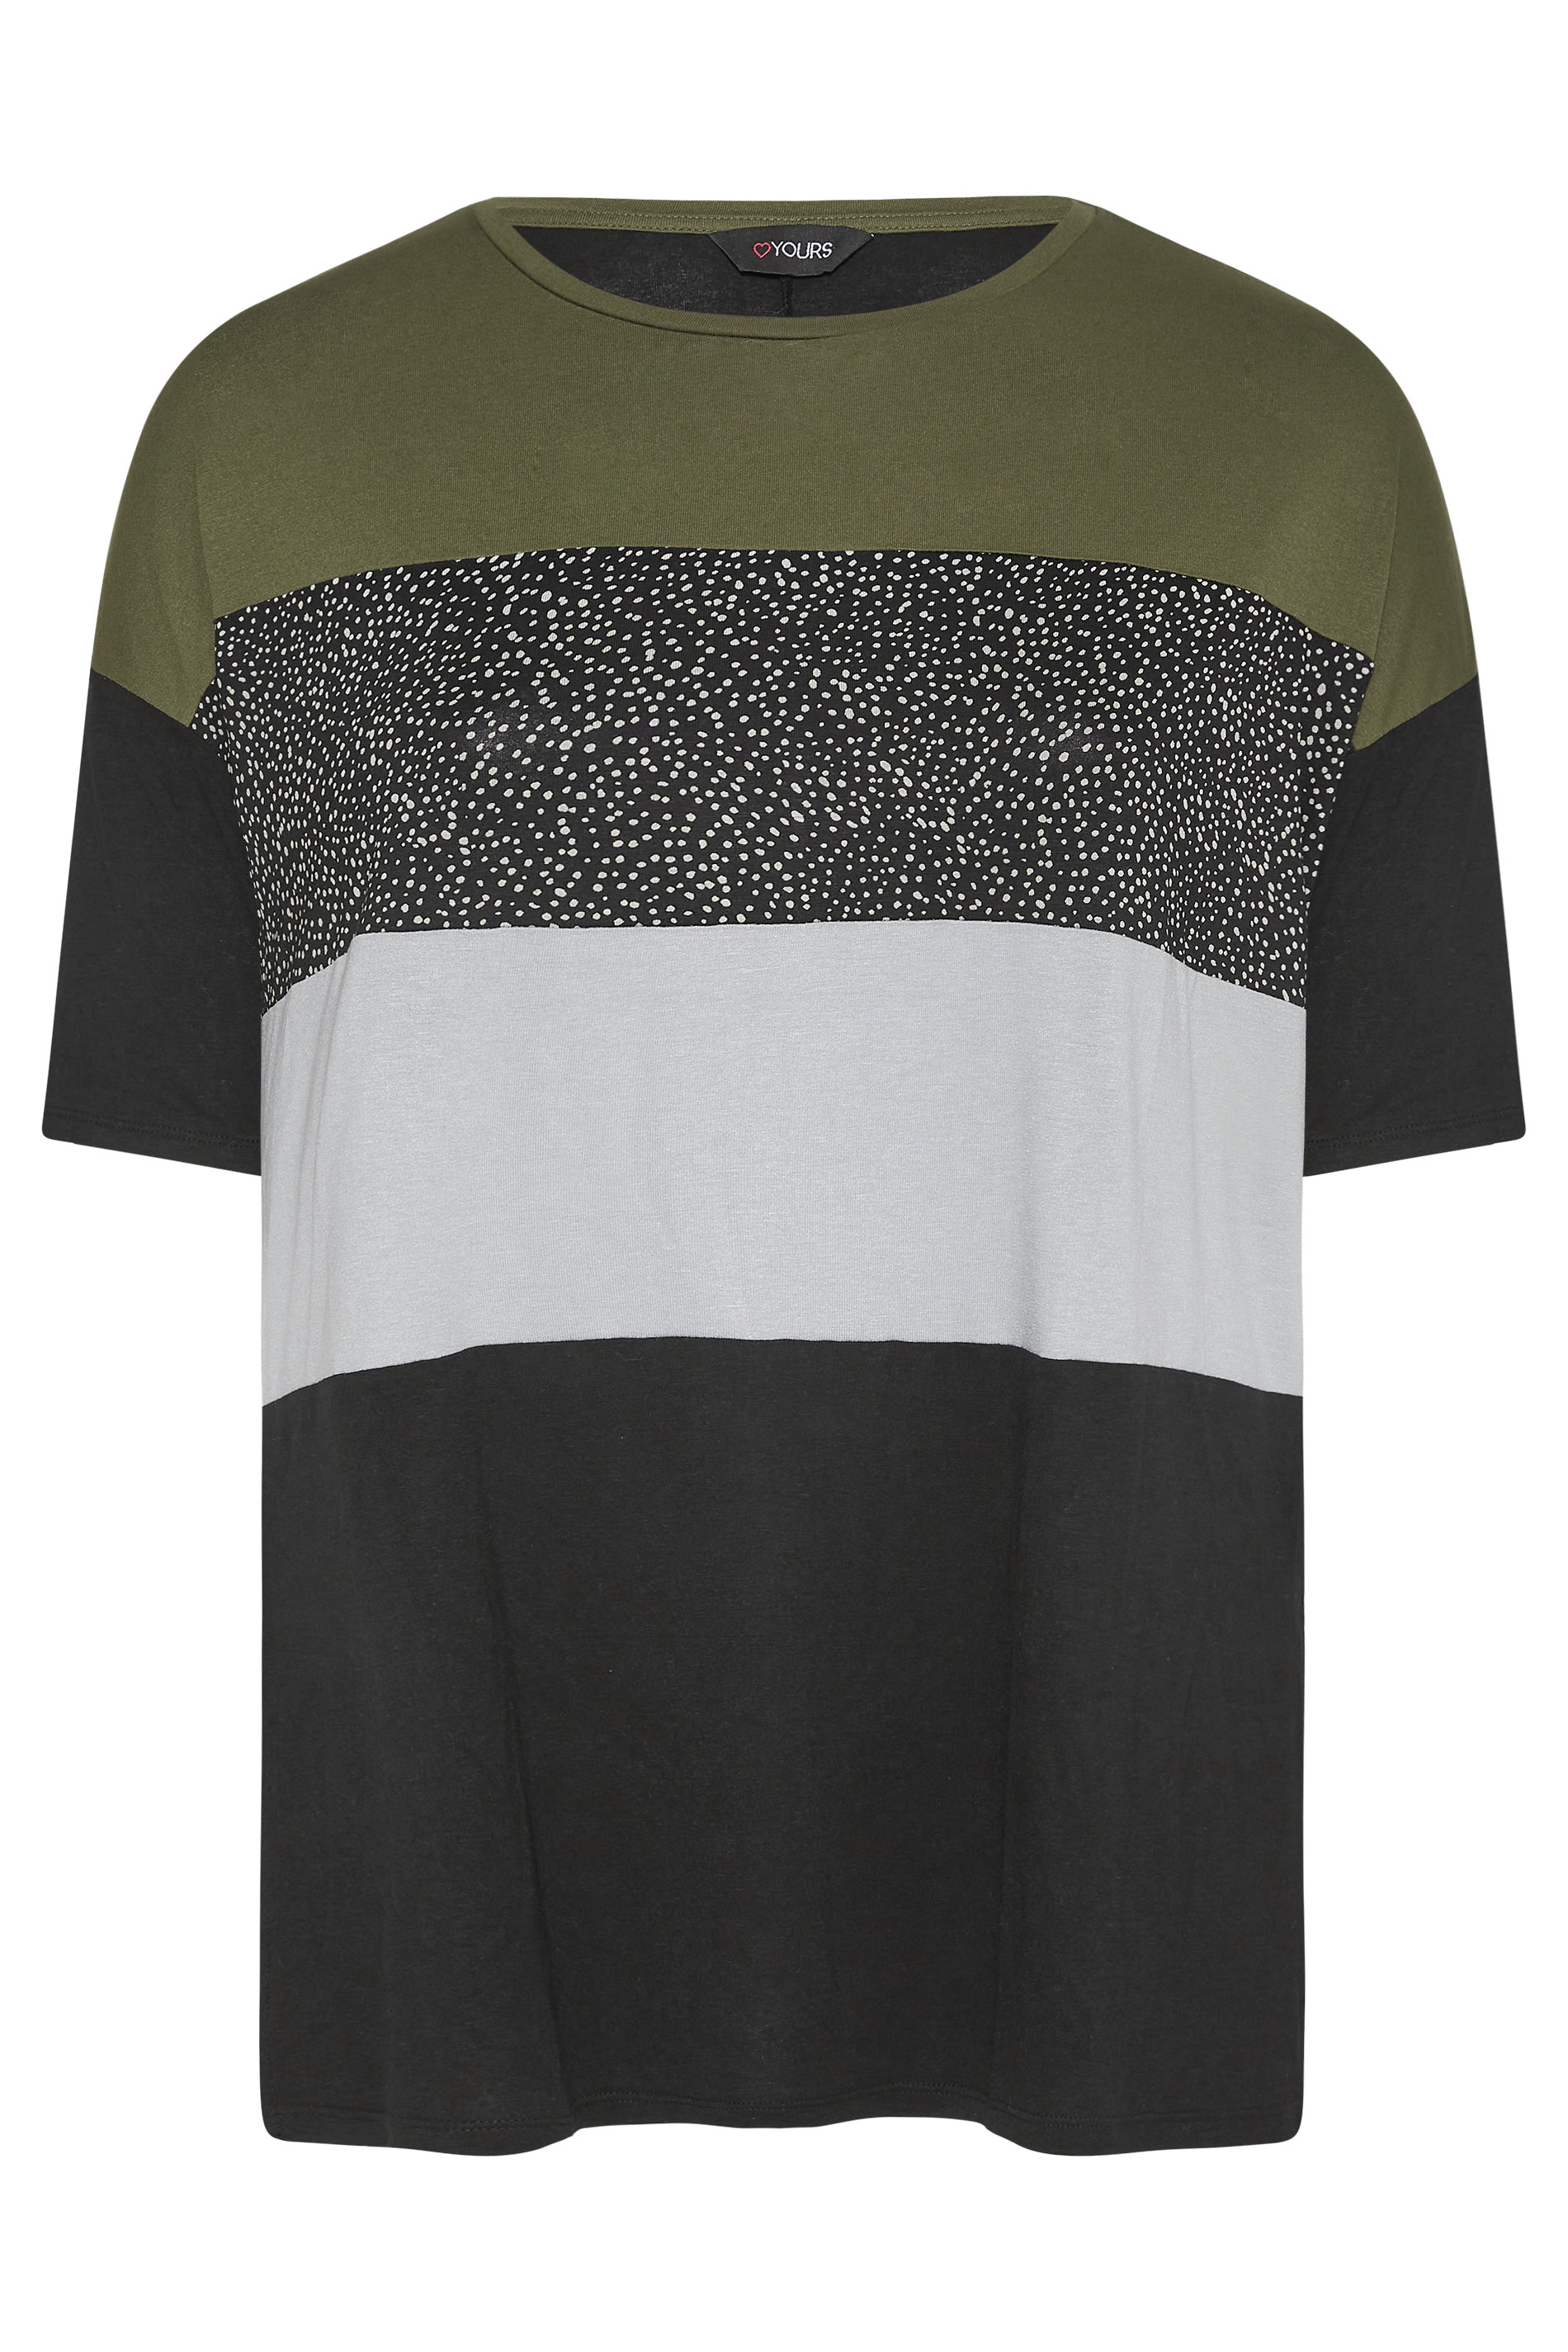 Grande taille  Tops Grande taille  T-Shirts | Top Vert Kaki & Léopard - AB00352